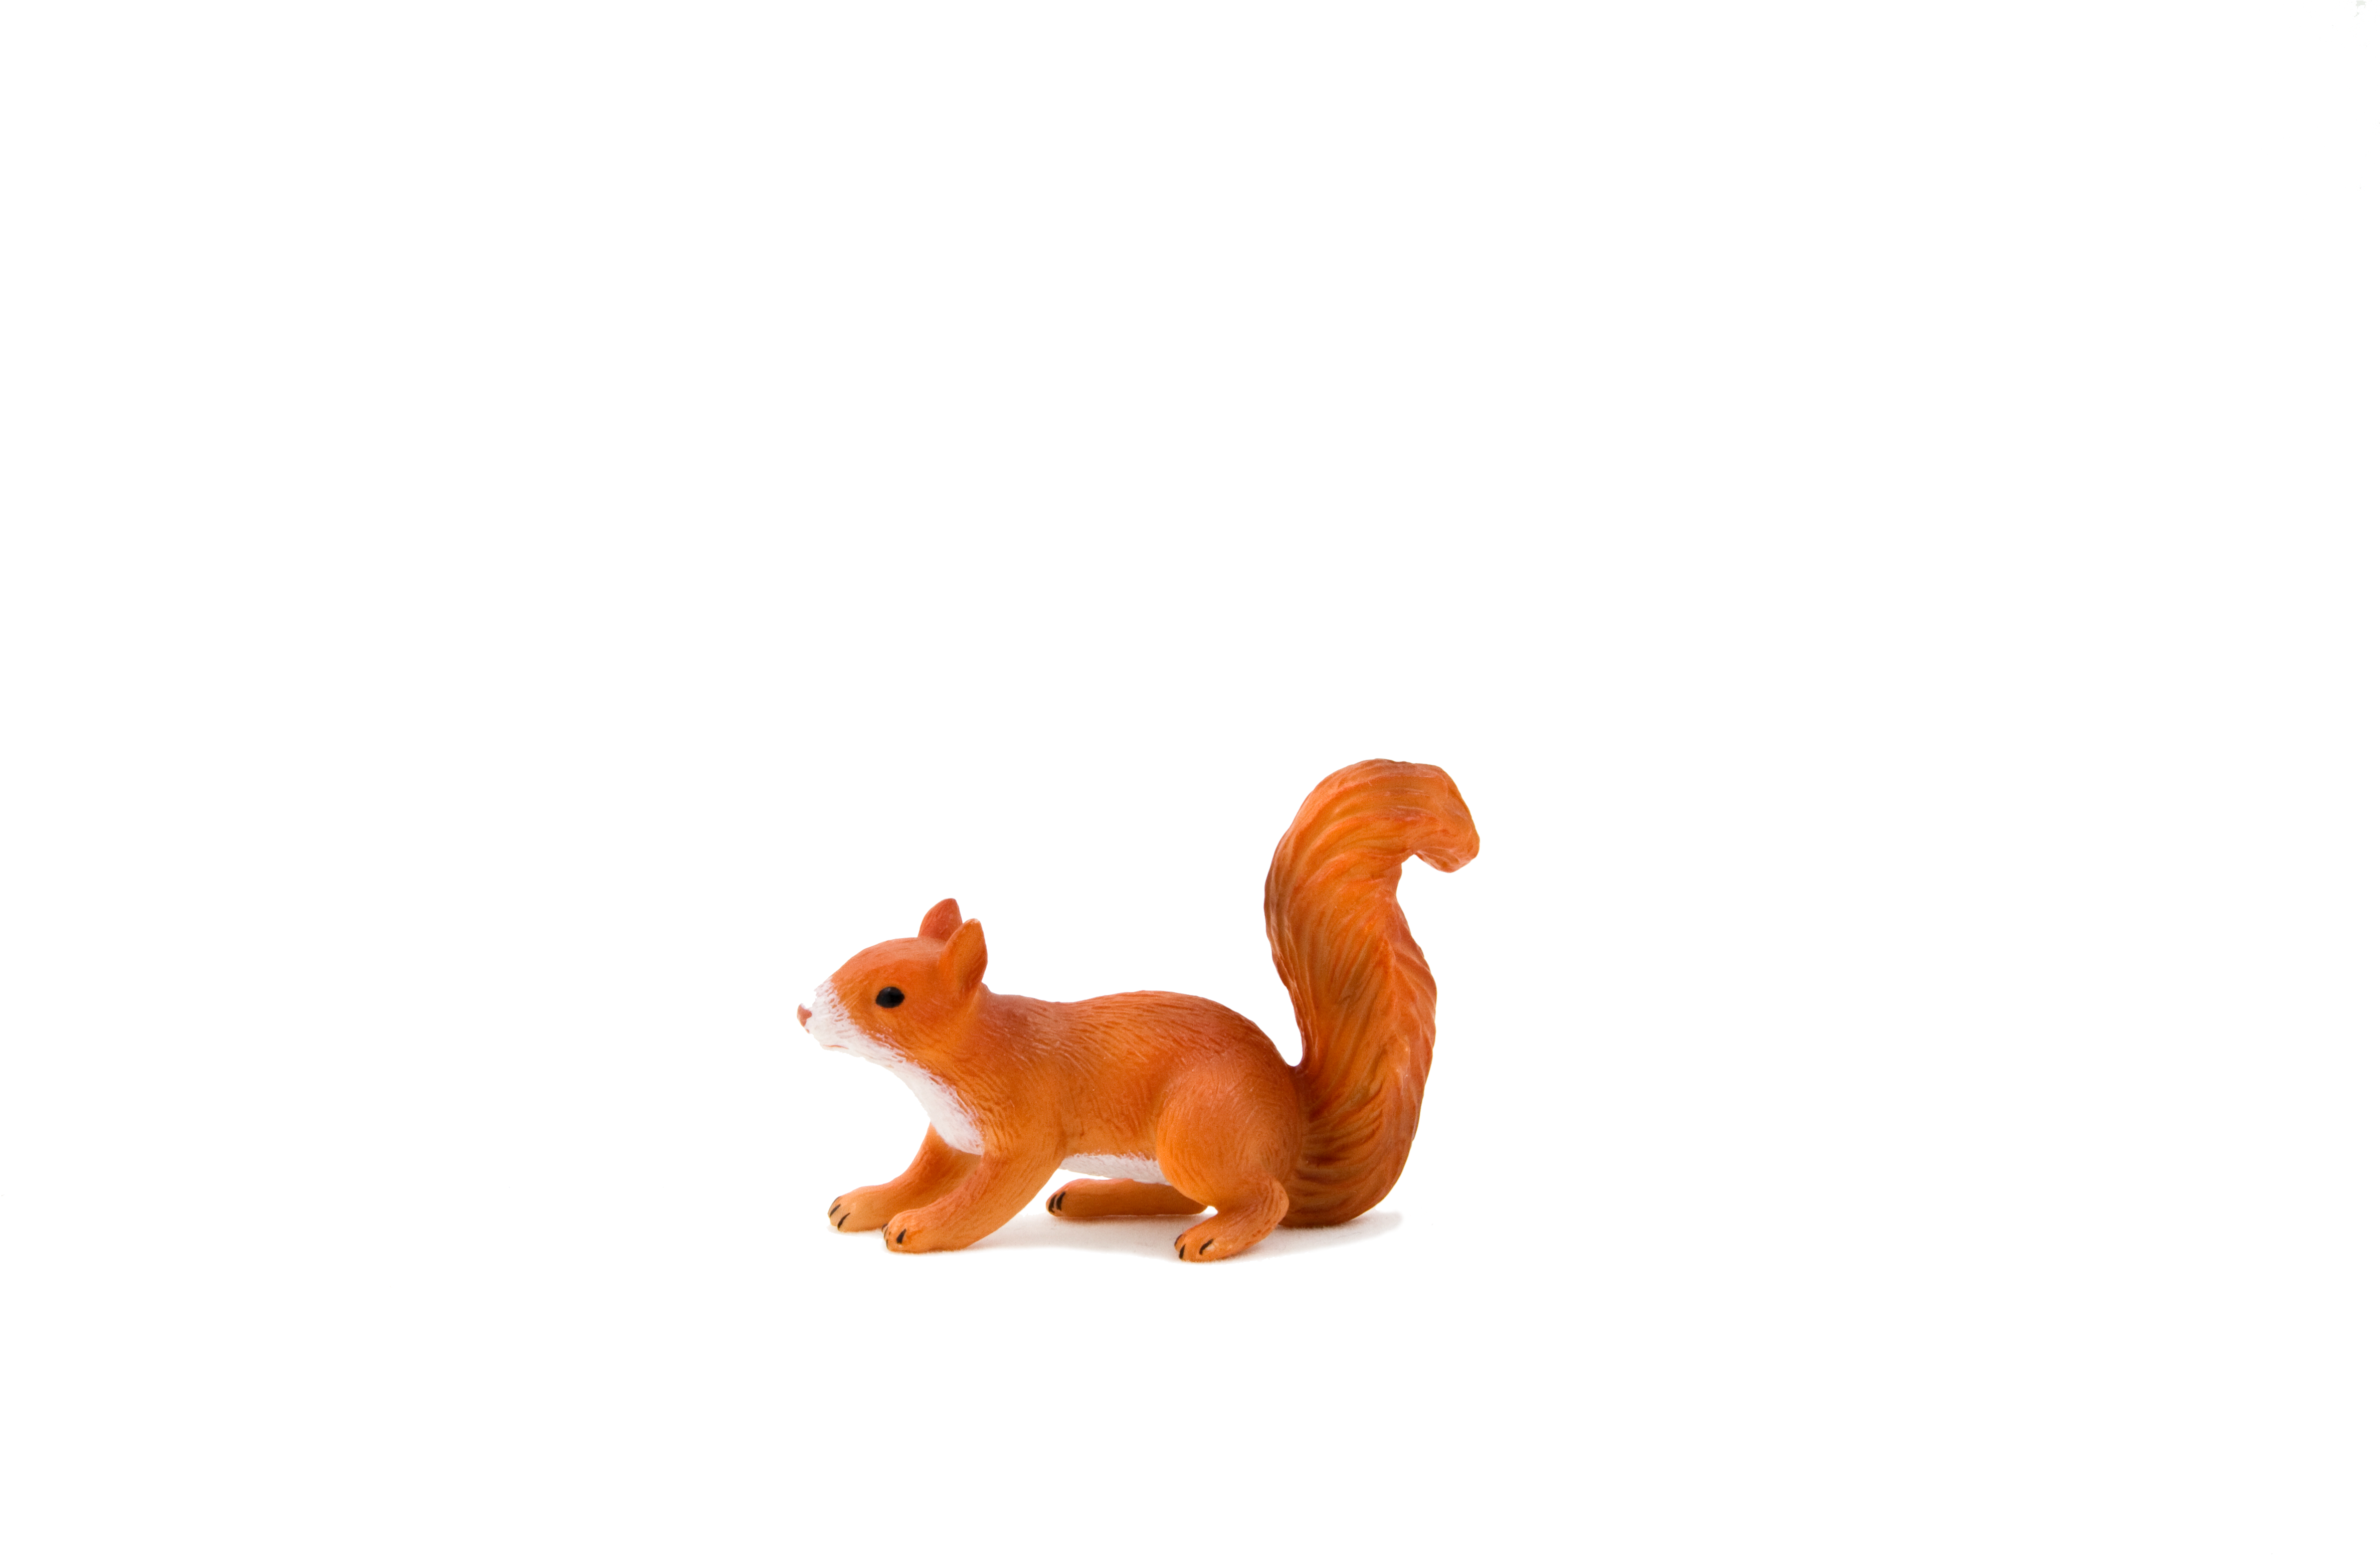 Animal Planet Red Squirrel Running - Animal Planet: Squirrel Running (5197x3465)